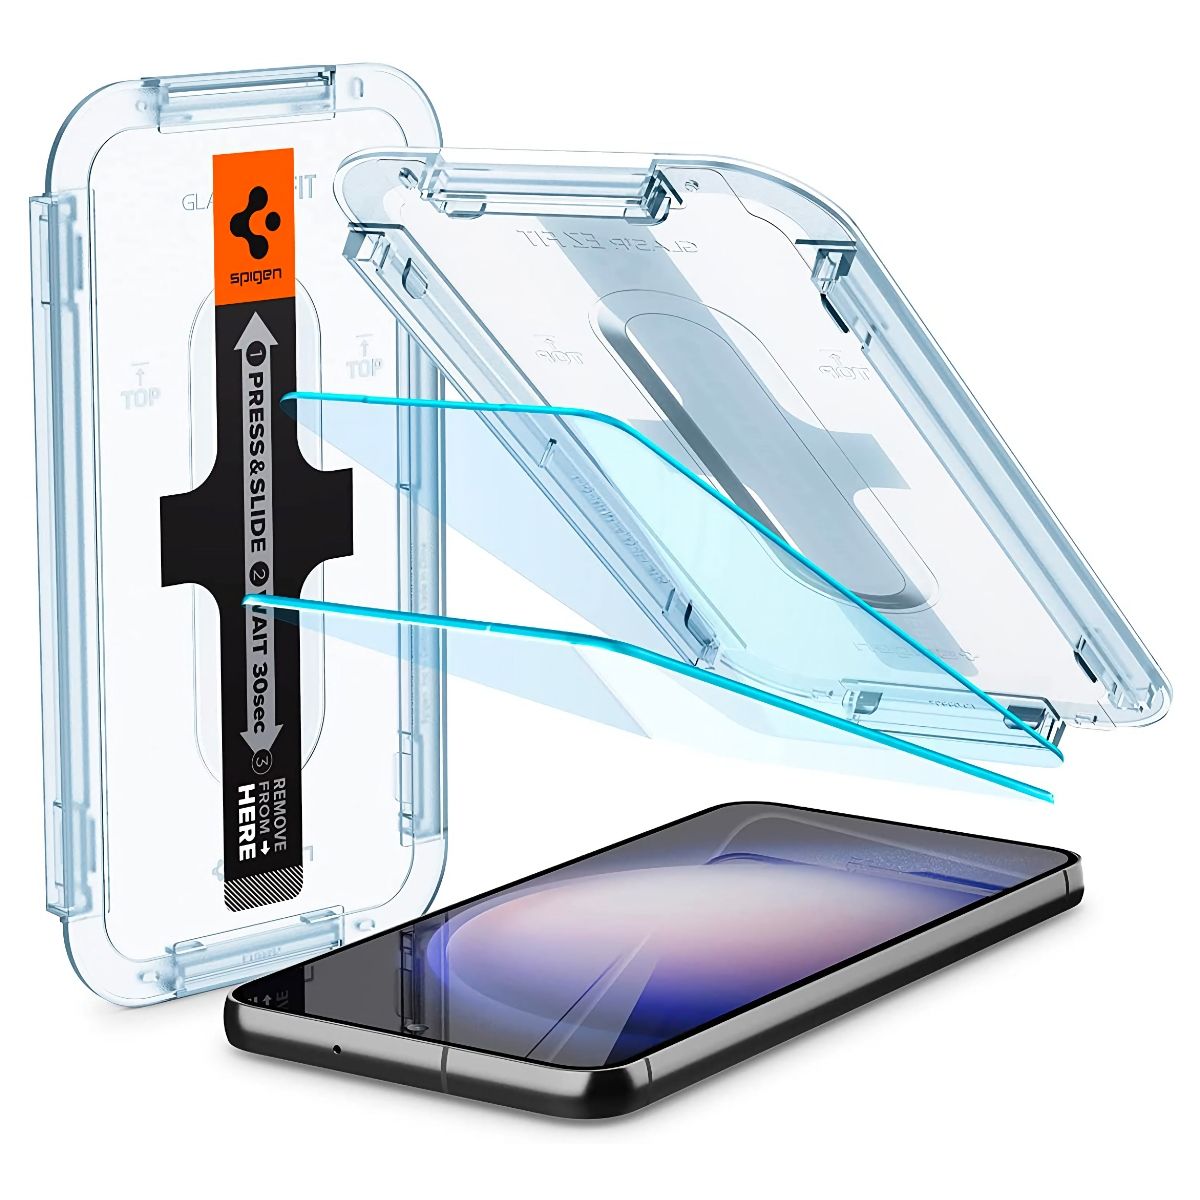 ZAGG InvisibleShield Fusion XTR2 ECO Screen Protector for Galaxy S23